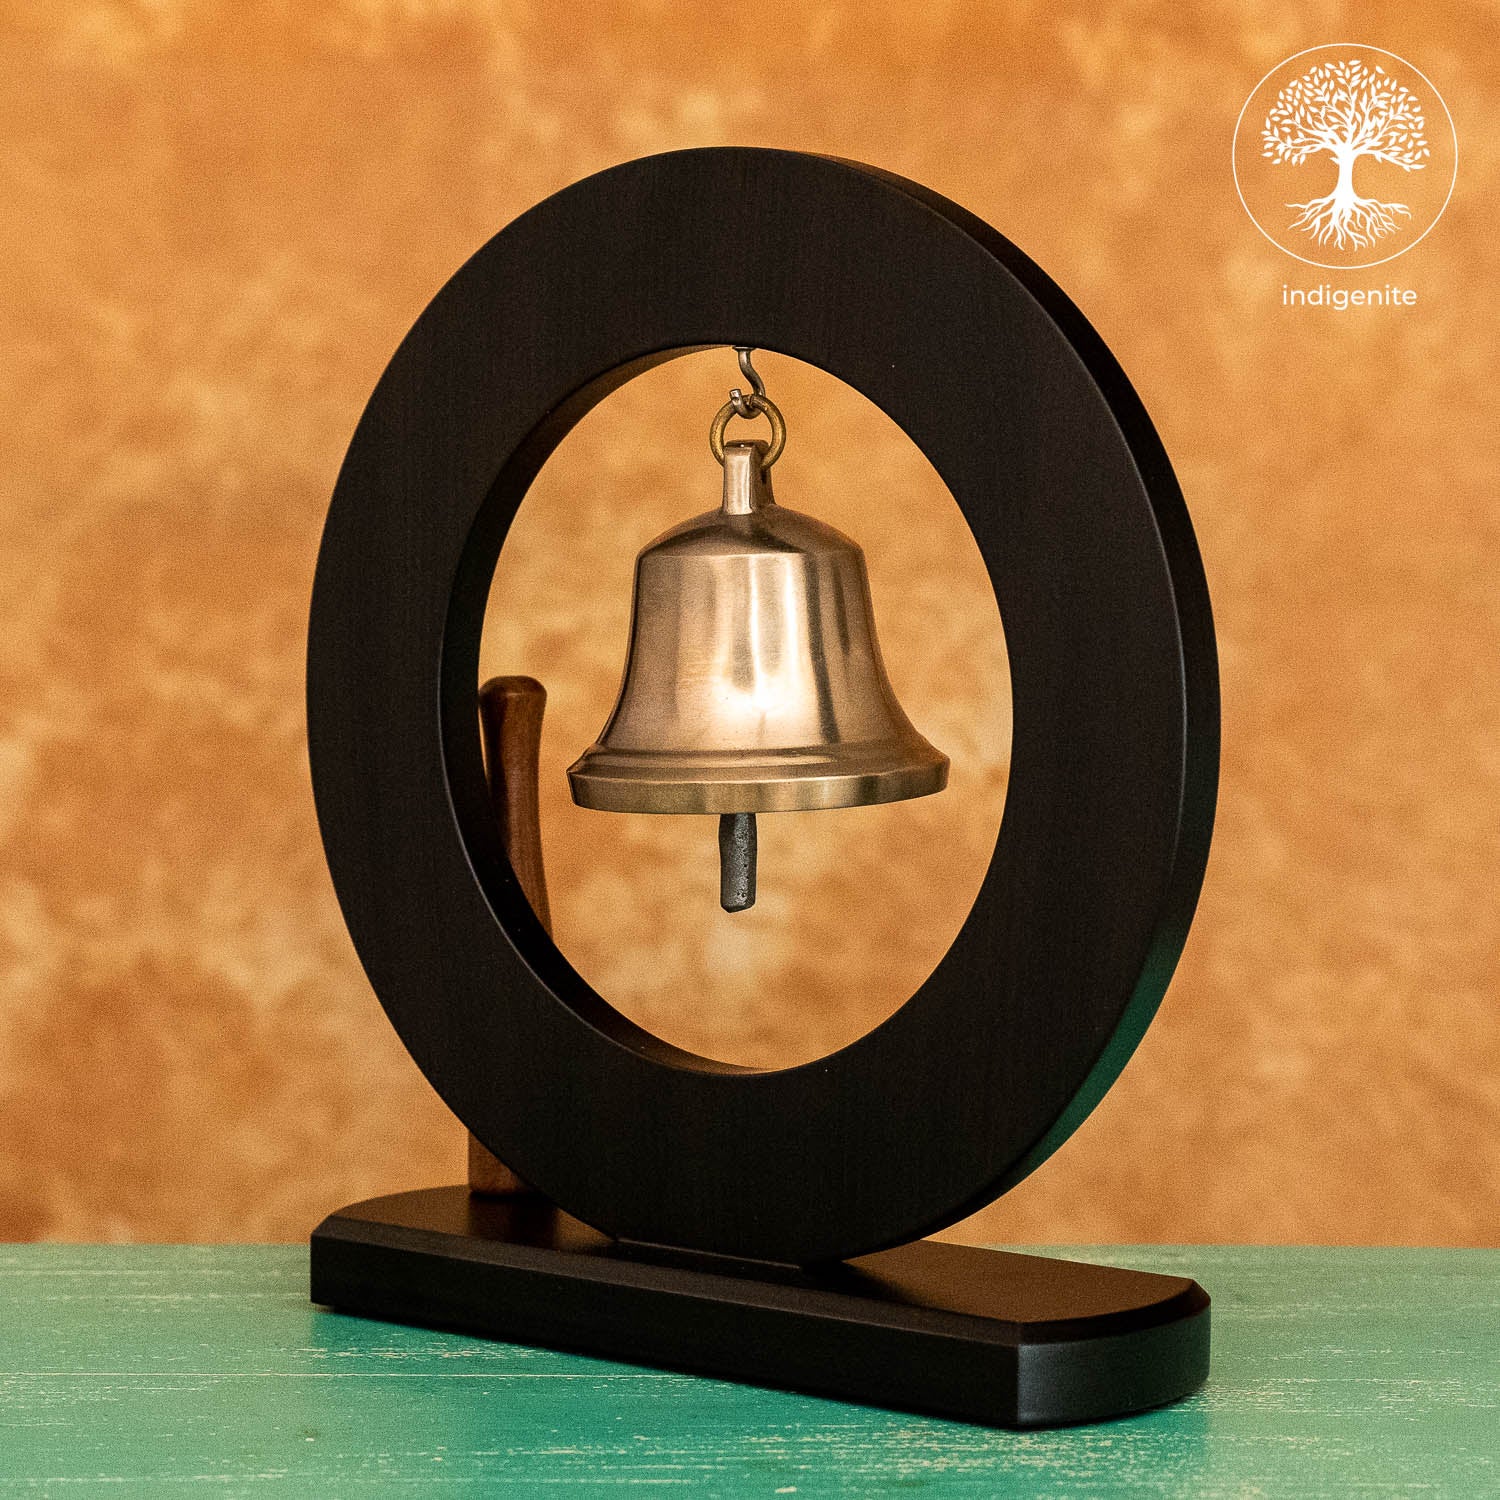 Om Bell in Wooden Base - Brass Decorative